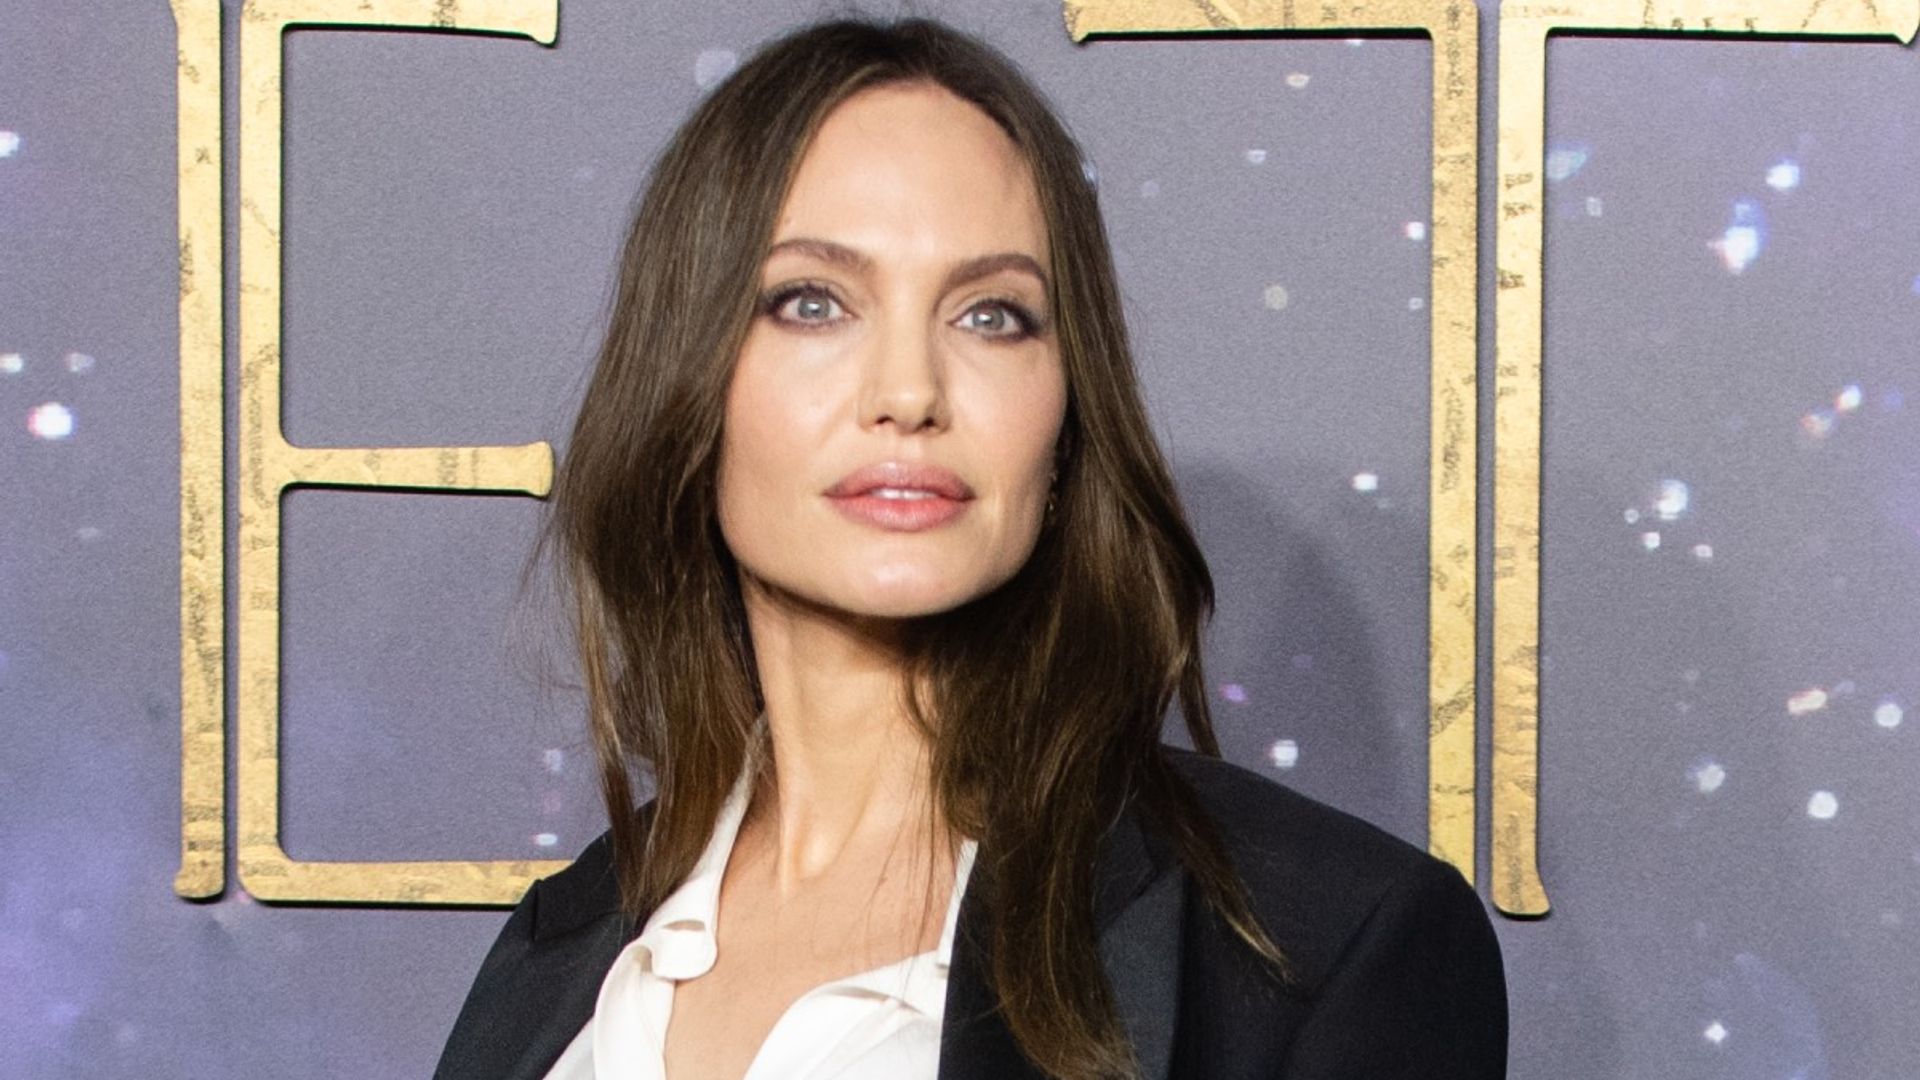 Angelina Jolie: News On Actress & Director's Movies - HELLO!